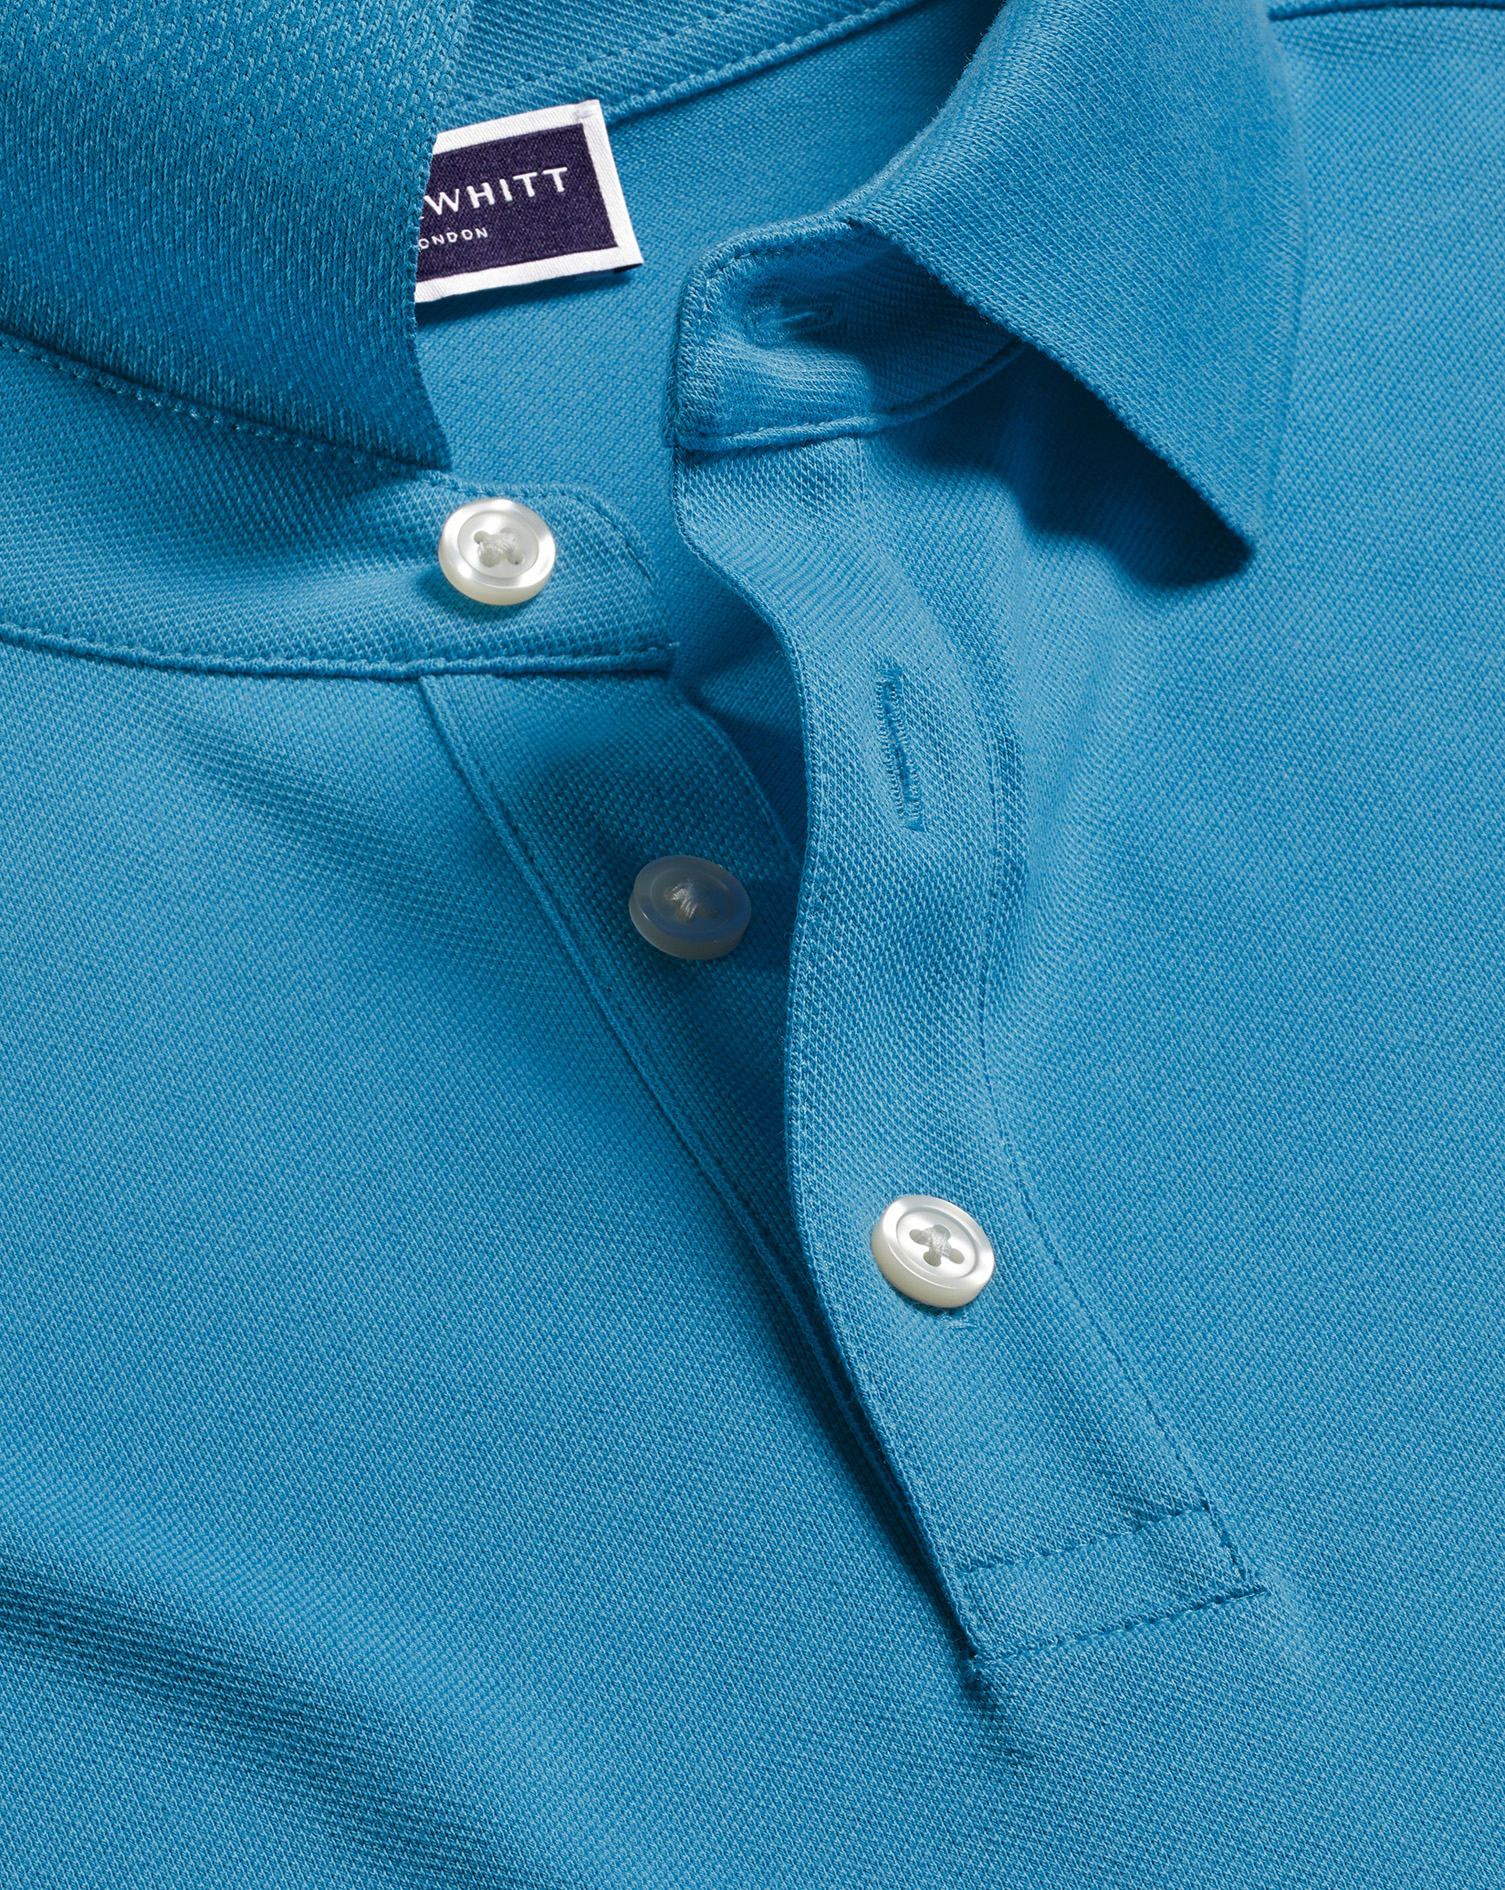 Men's Charles Tyrwhitt Pique Polo Shirt - Turquoise Blue Size Small Cotton
